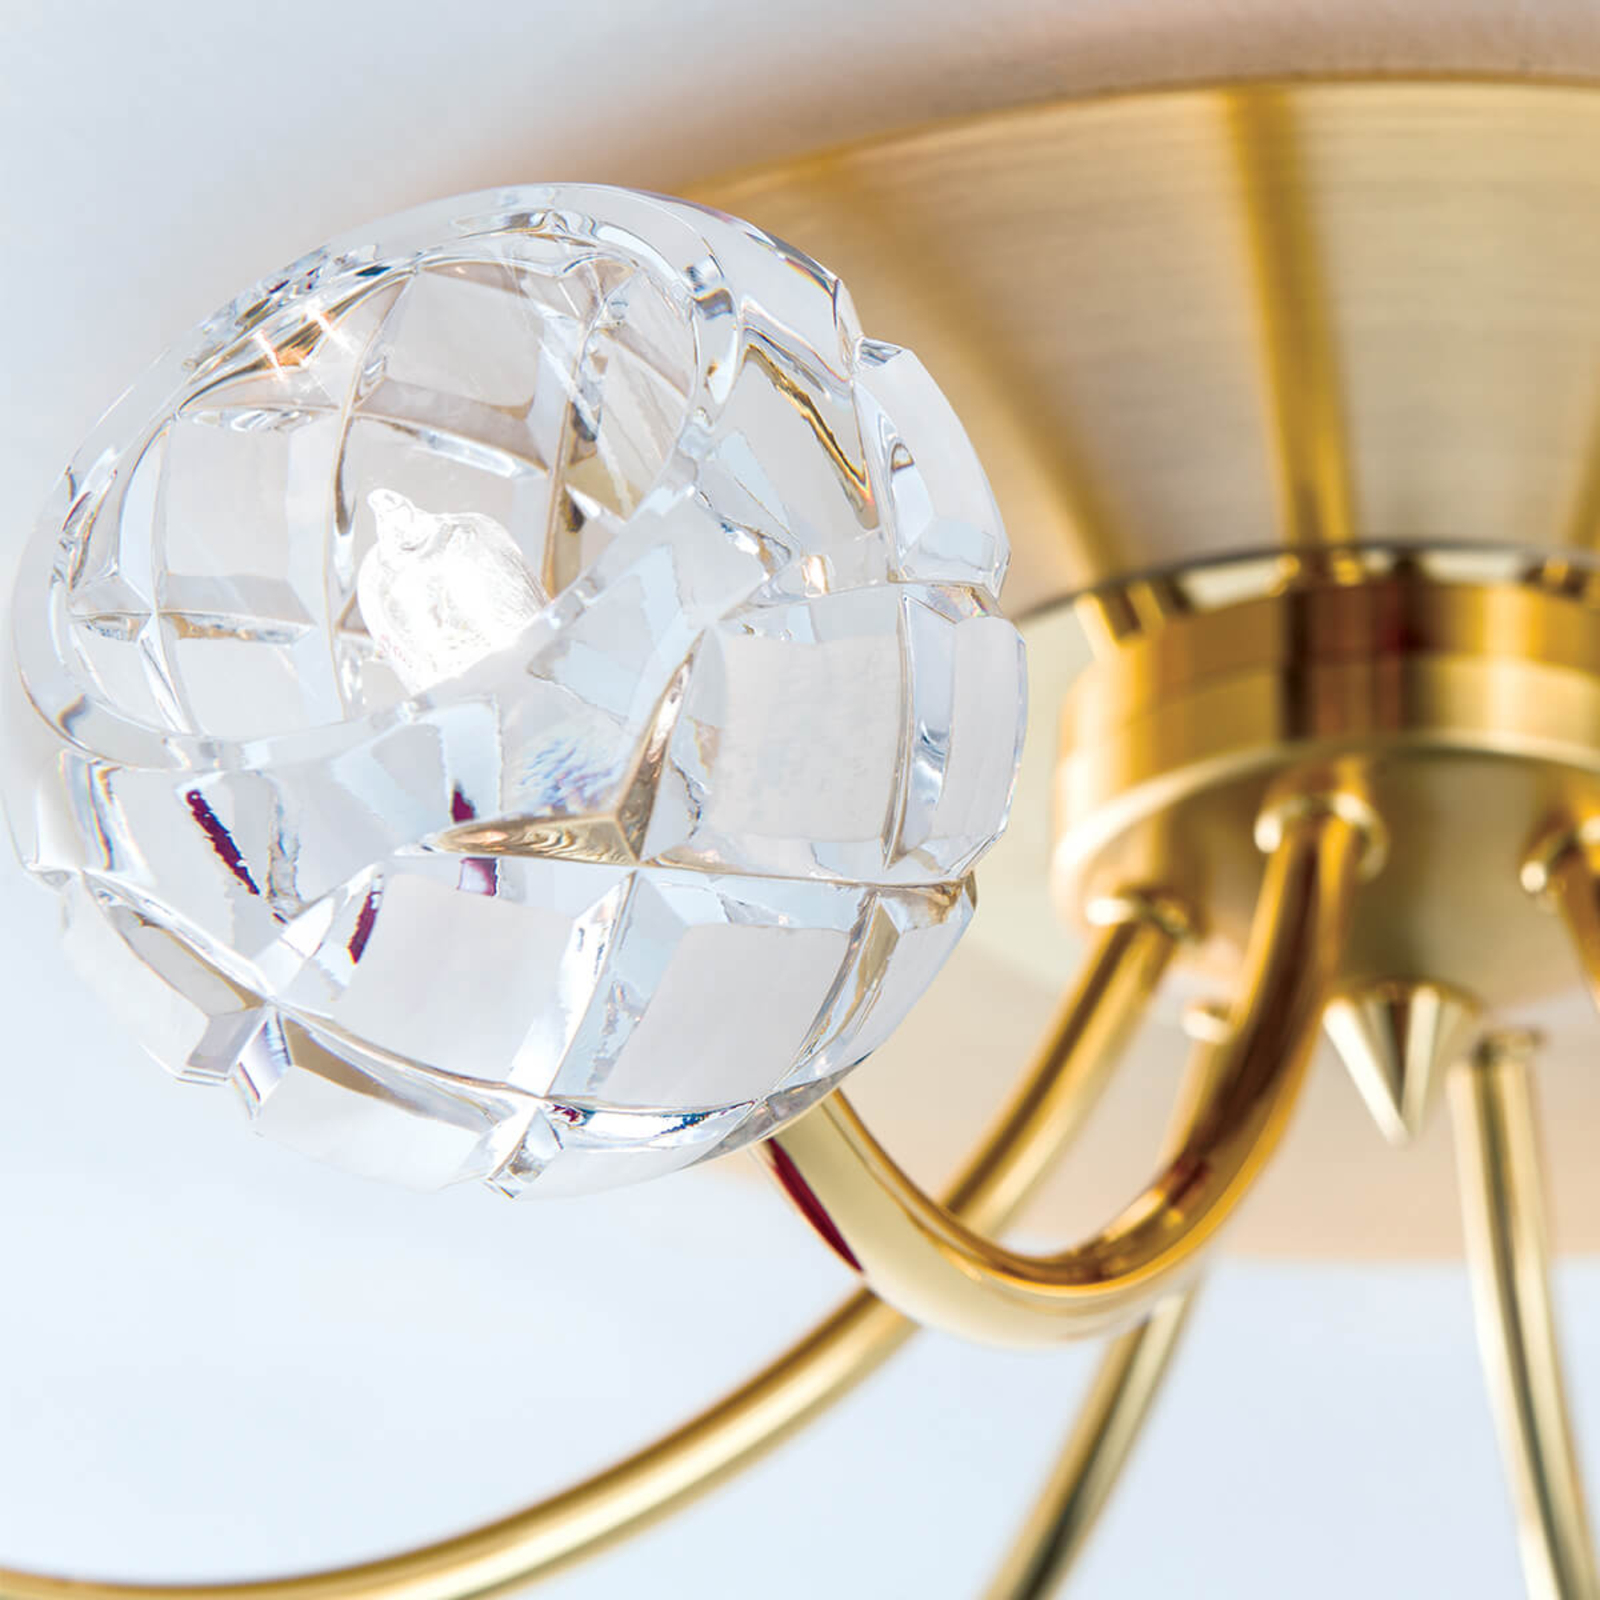 Loodkristal-plafondlamp Maderno, goud, 57cm